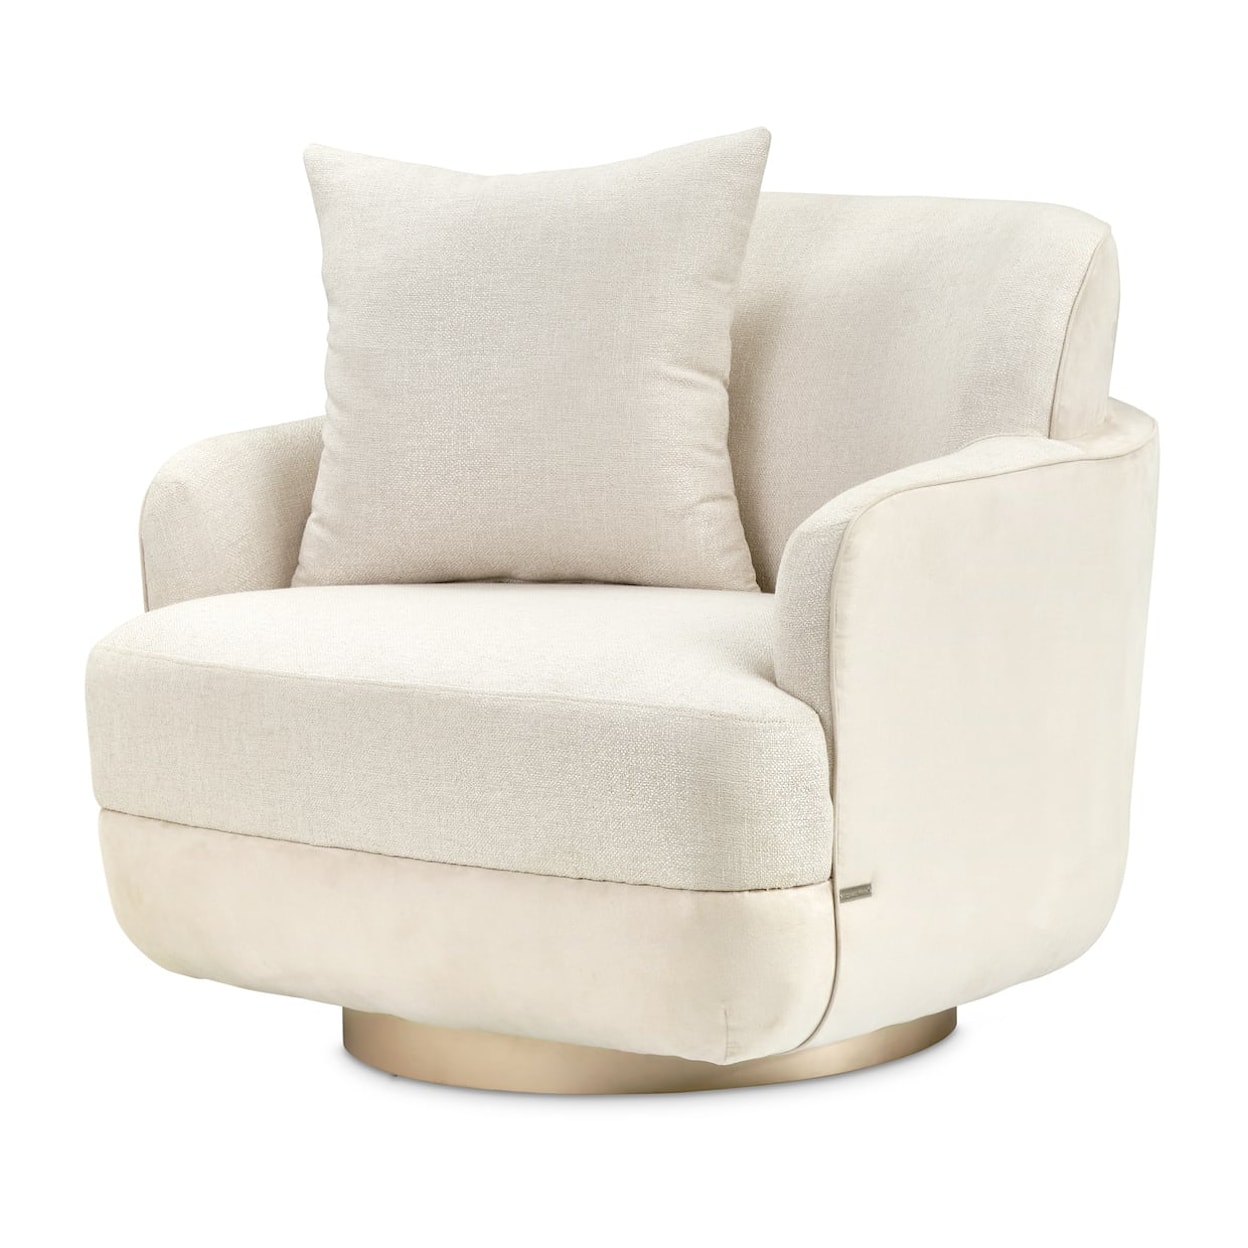 Michael Amini Aurora Upholstered Swivel Chair